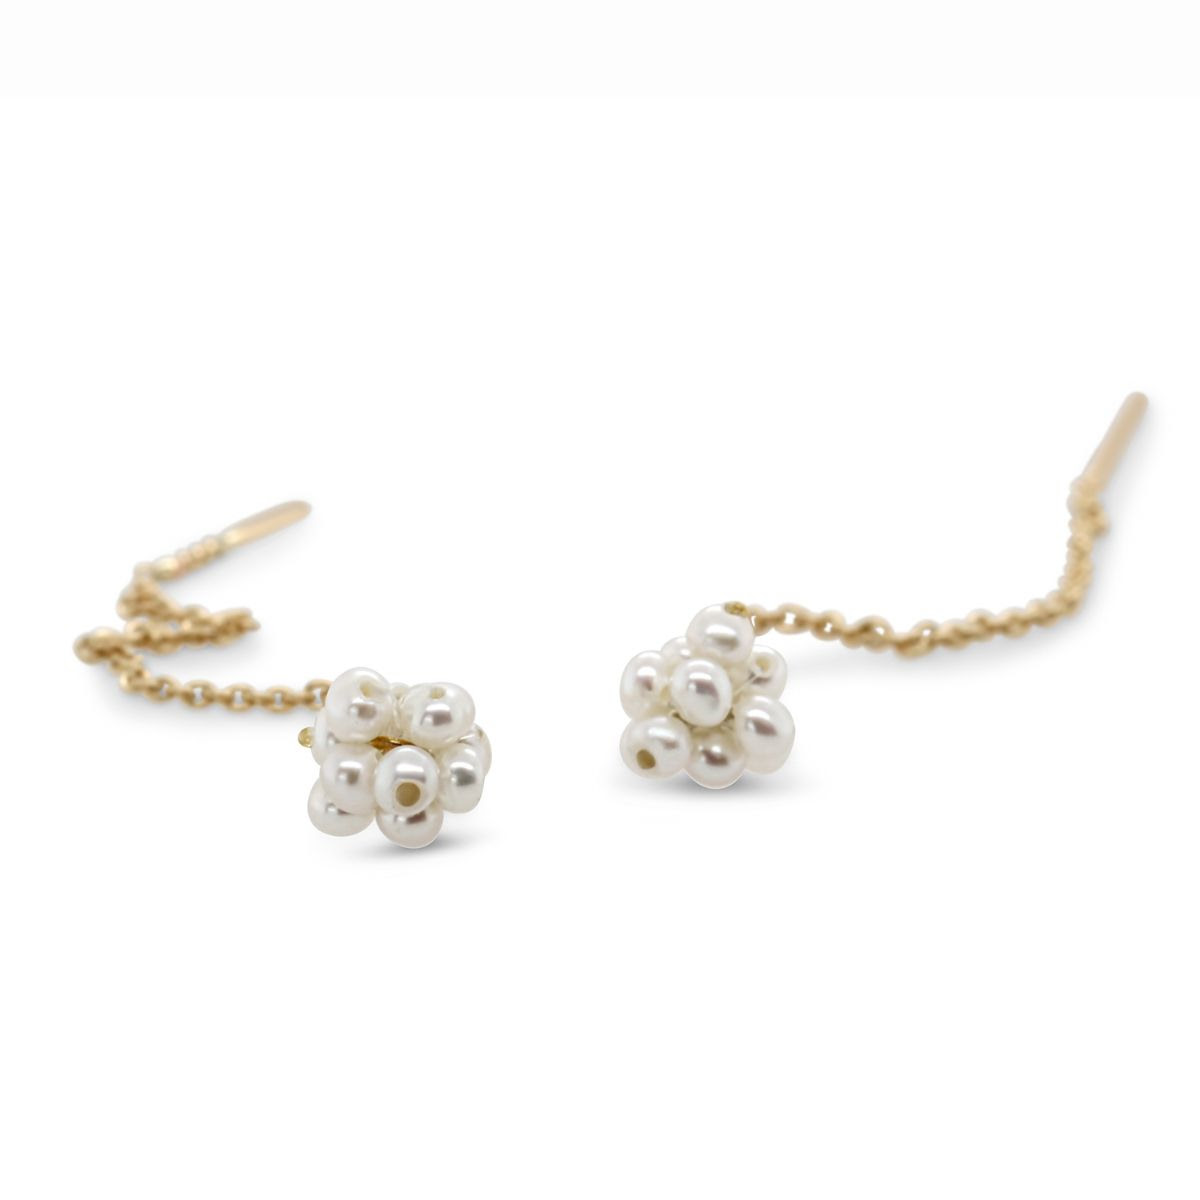 Dainty white pearl cluster earrings by neeltje huddleston slater at designyard contemporary jewellery dublin ireland